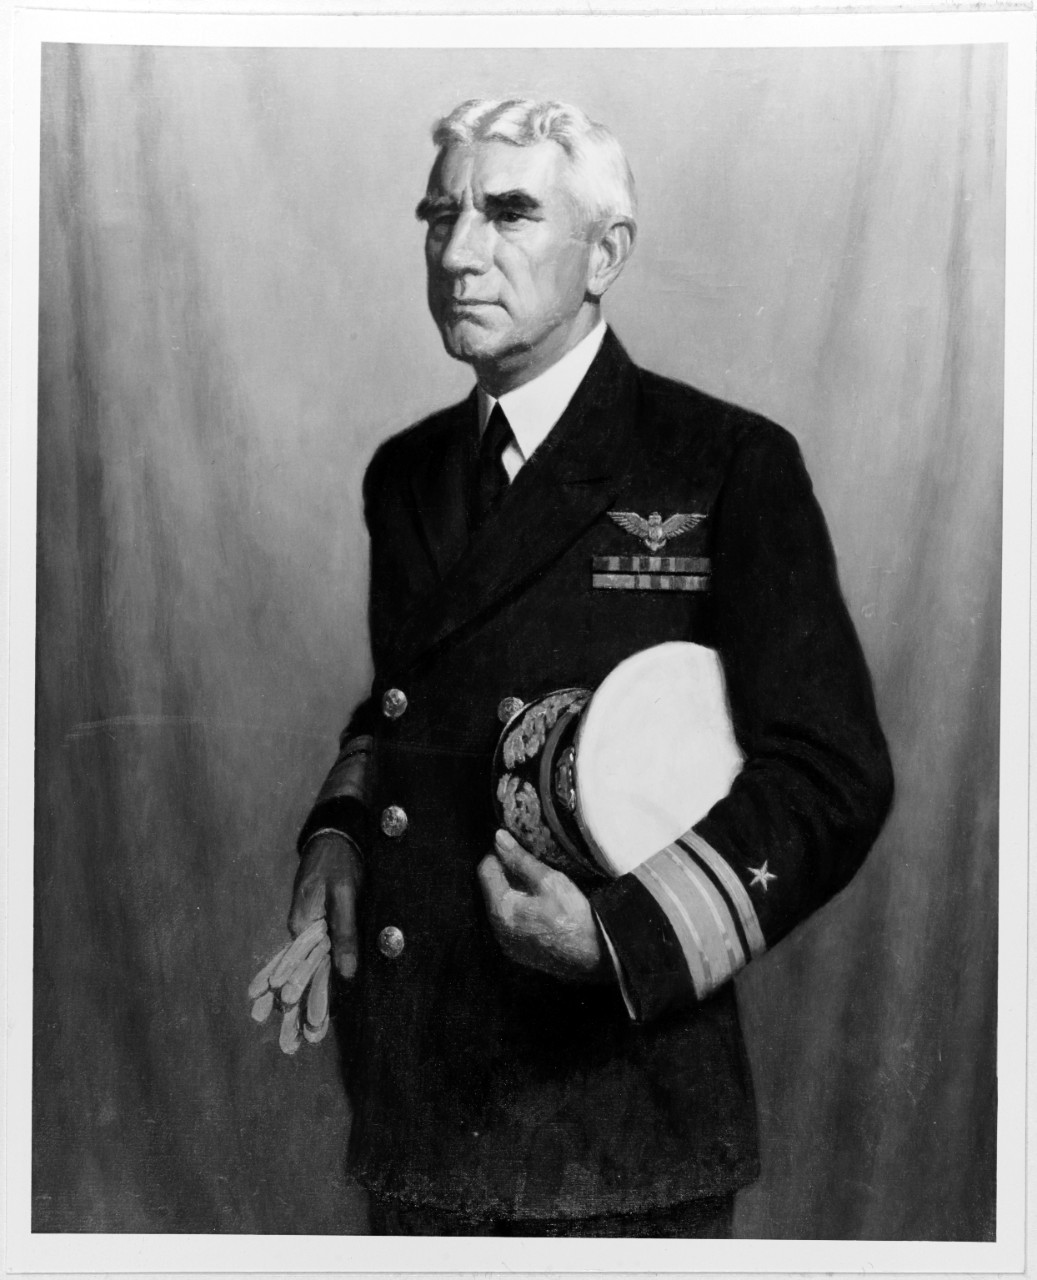 Rear Admiral Albert W. Marshall, USN